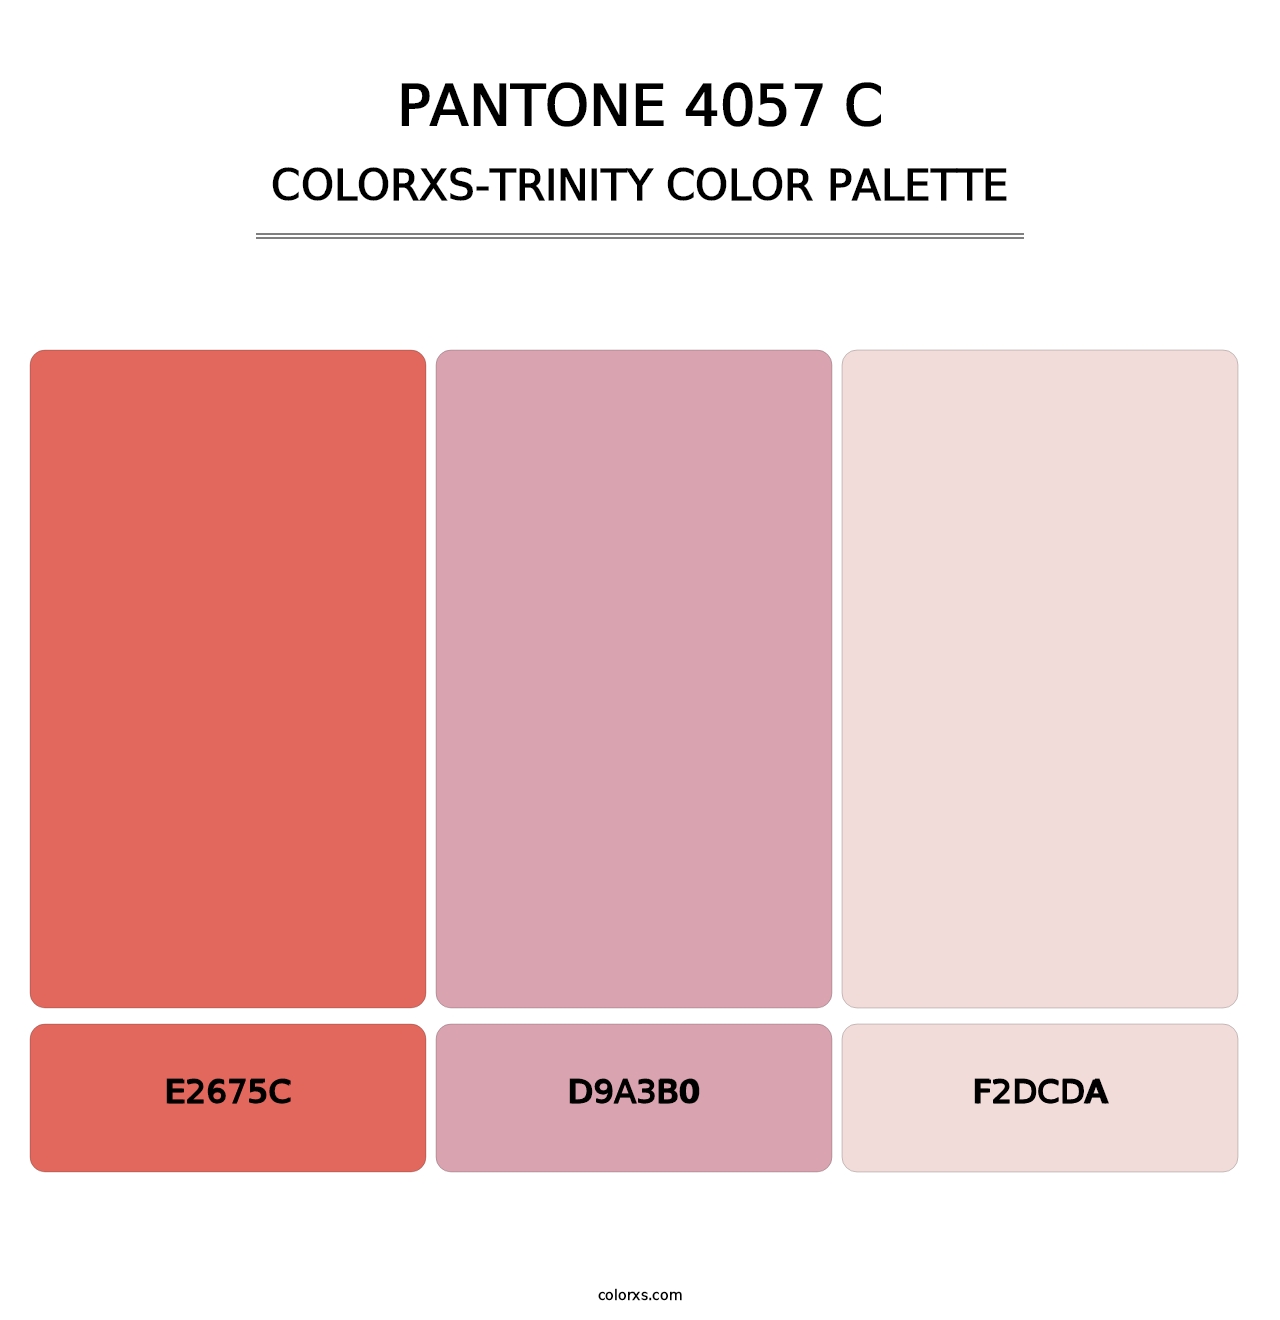 PANTONE 4057 C - Colorxs Trinity Palette